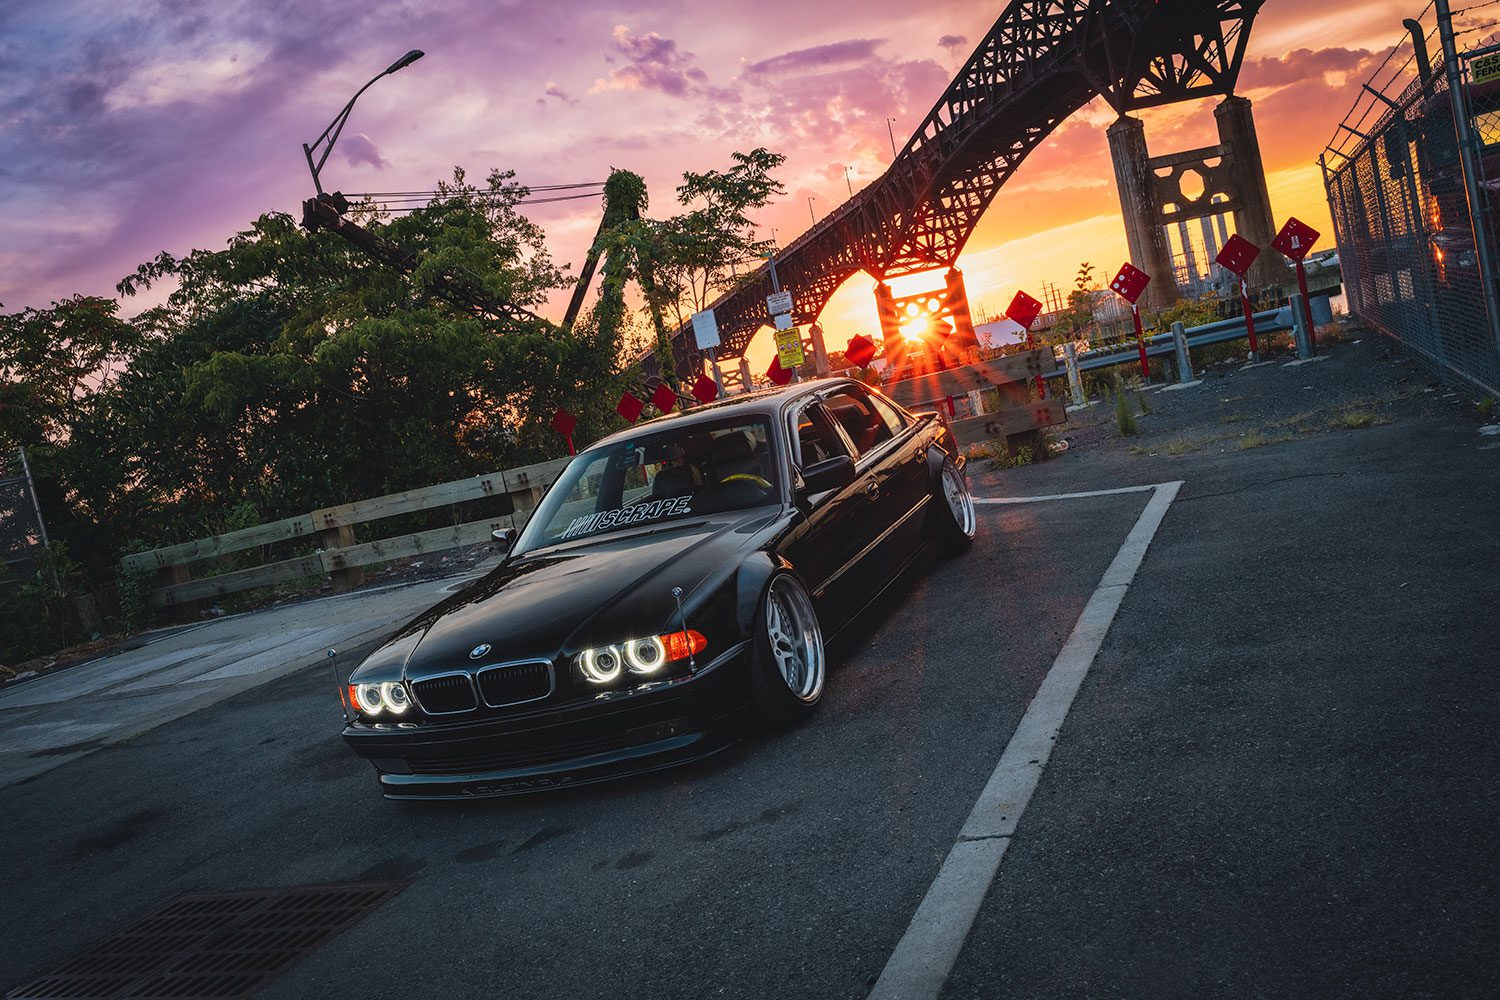 BMW E38 7 Series